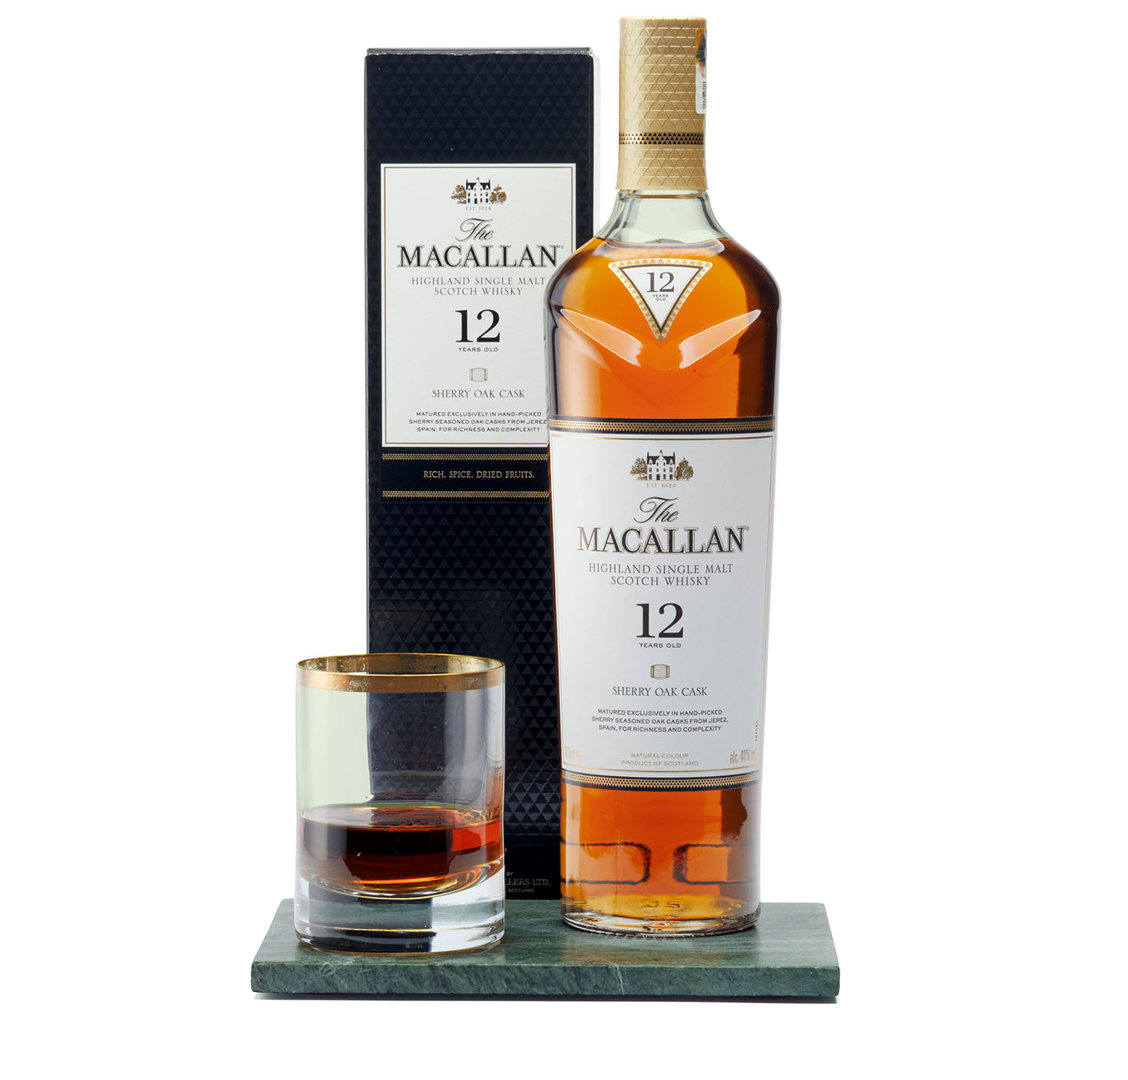 The Macallan Sherry Oak Cask 12 years von The Macallan Distillery